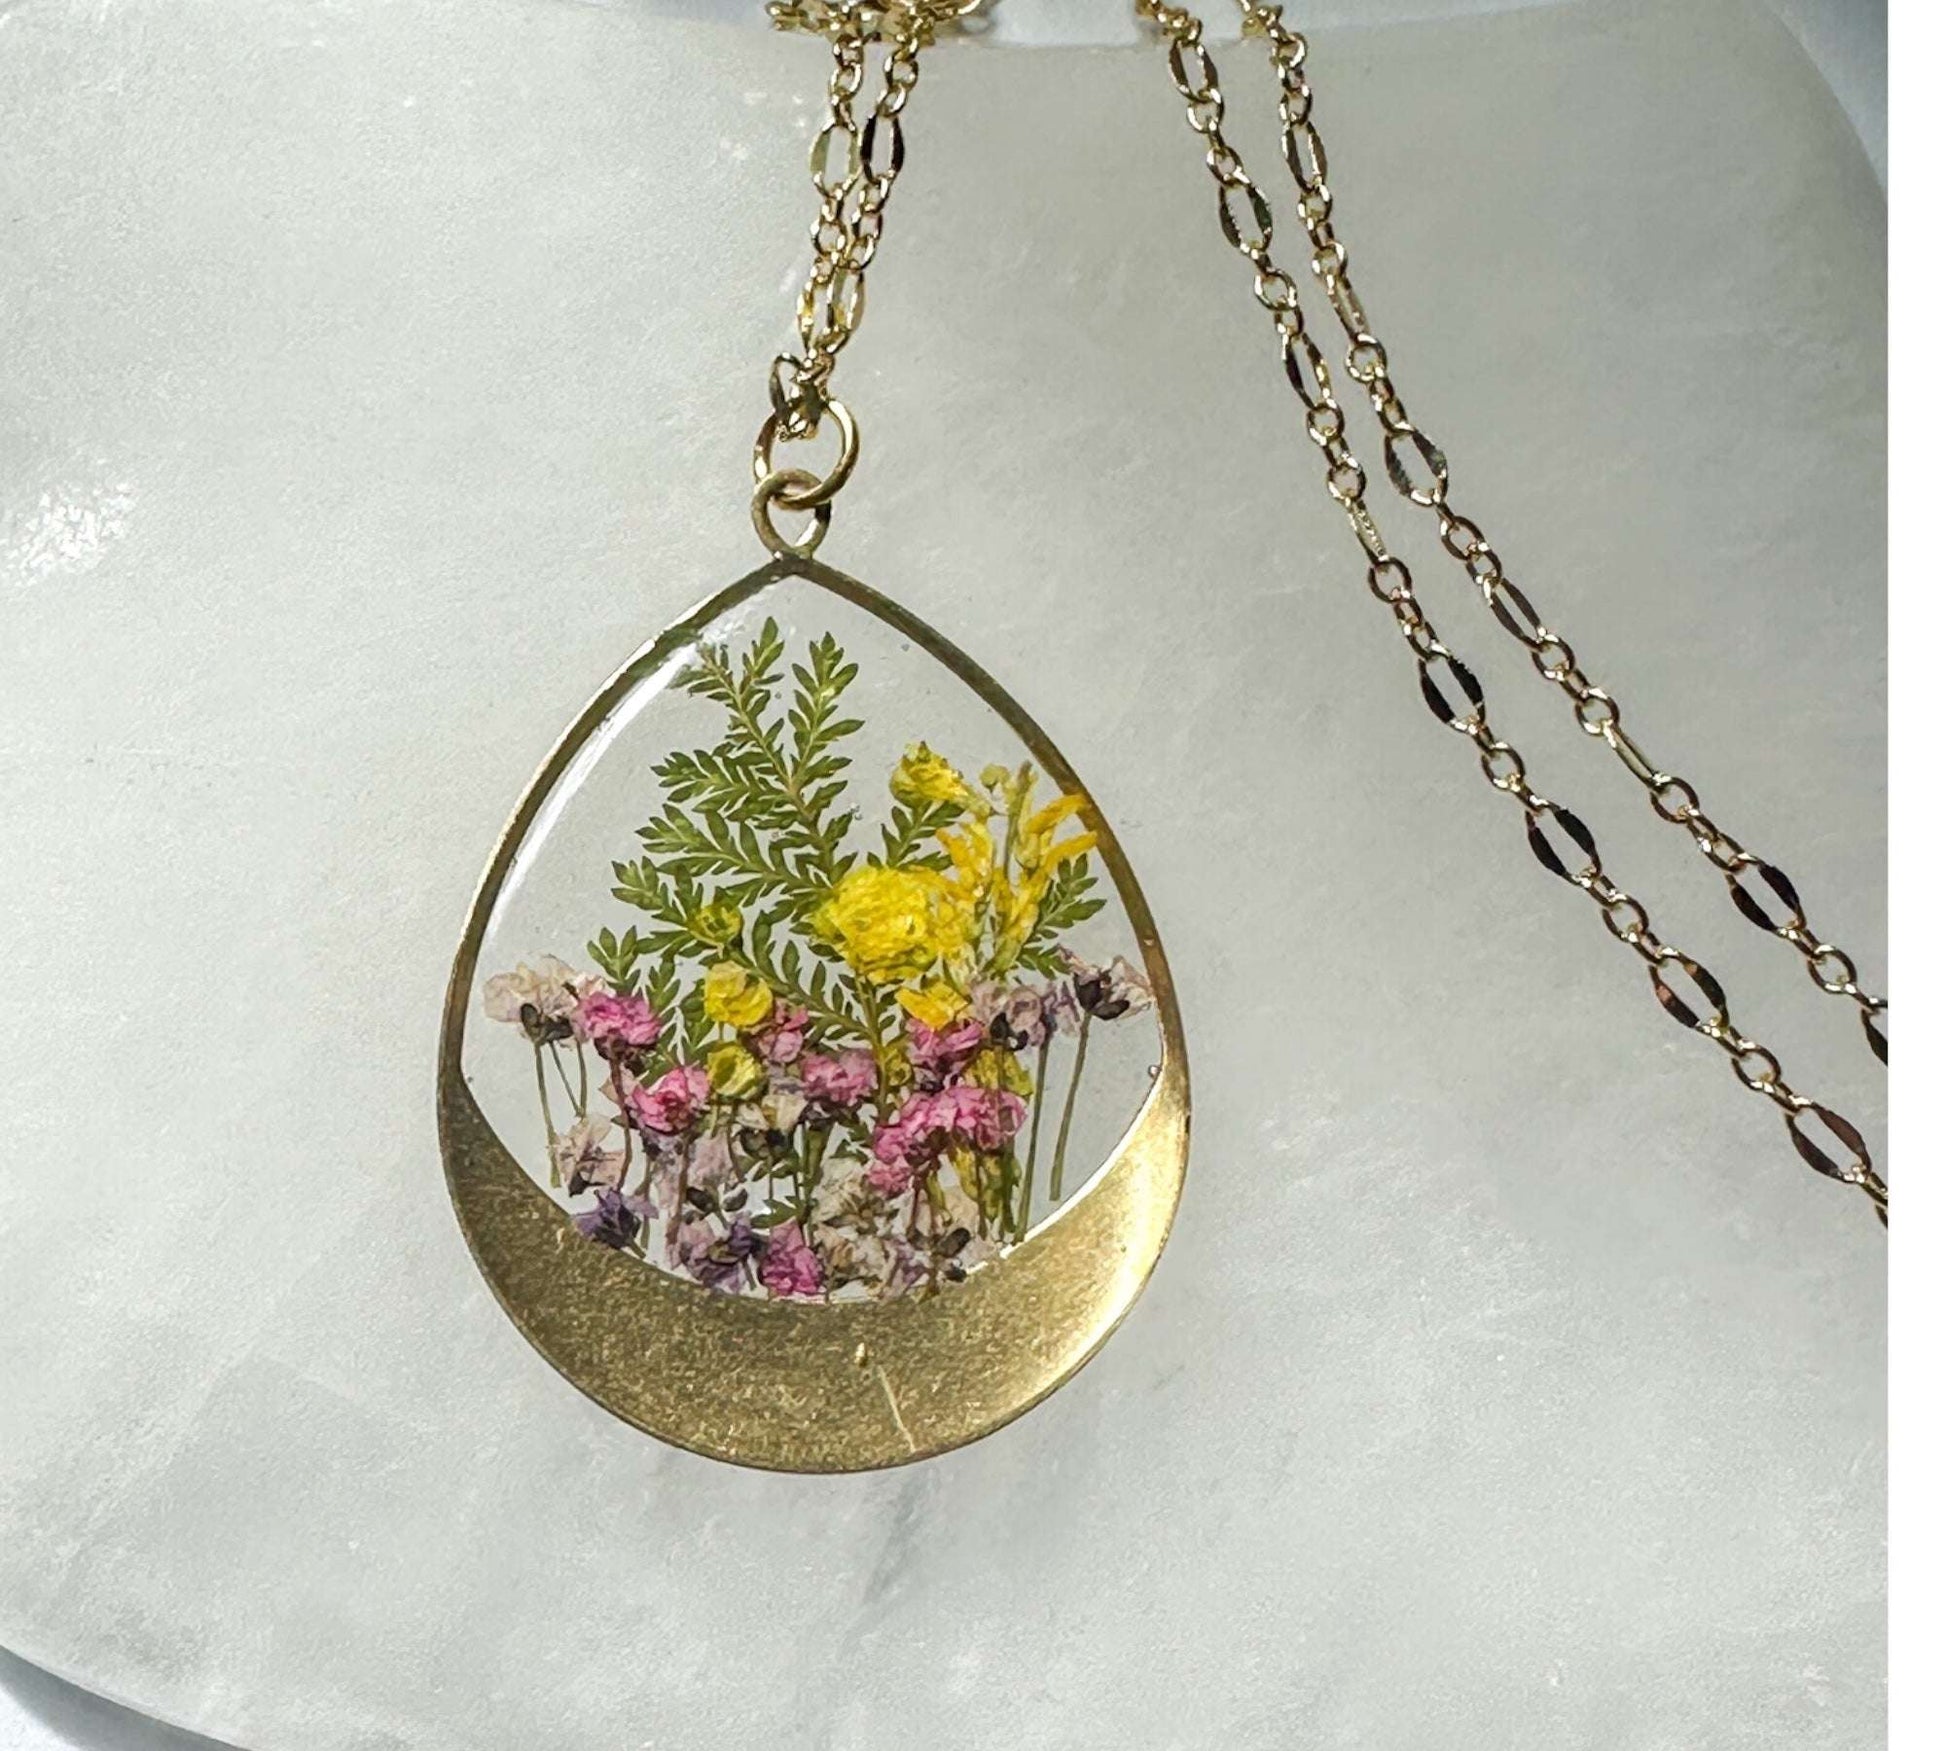 Garden Serenity - Handmade Pressed Flower Multi-Layer Resin Necklace